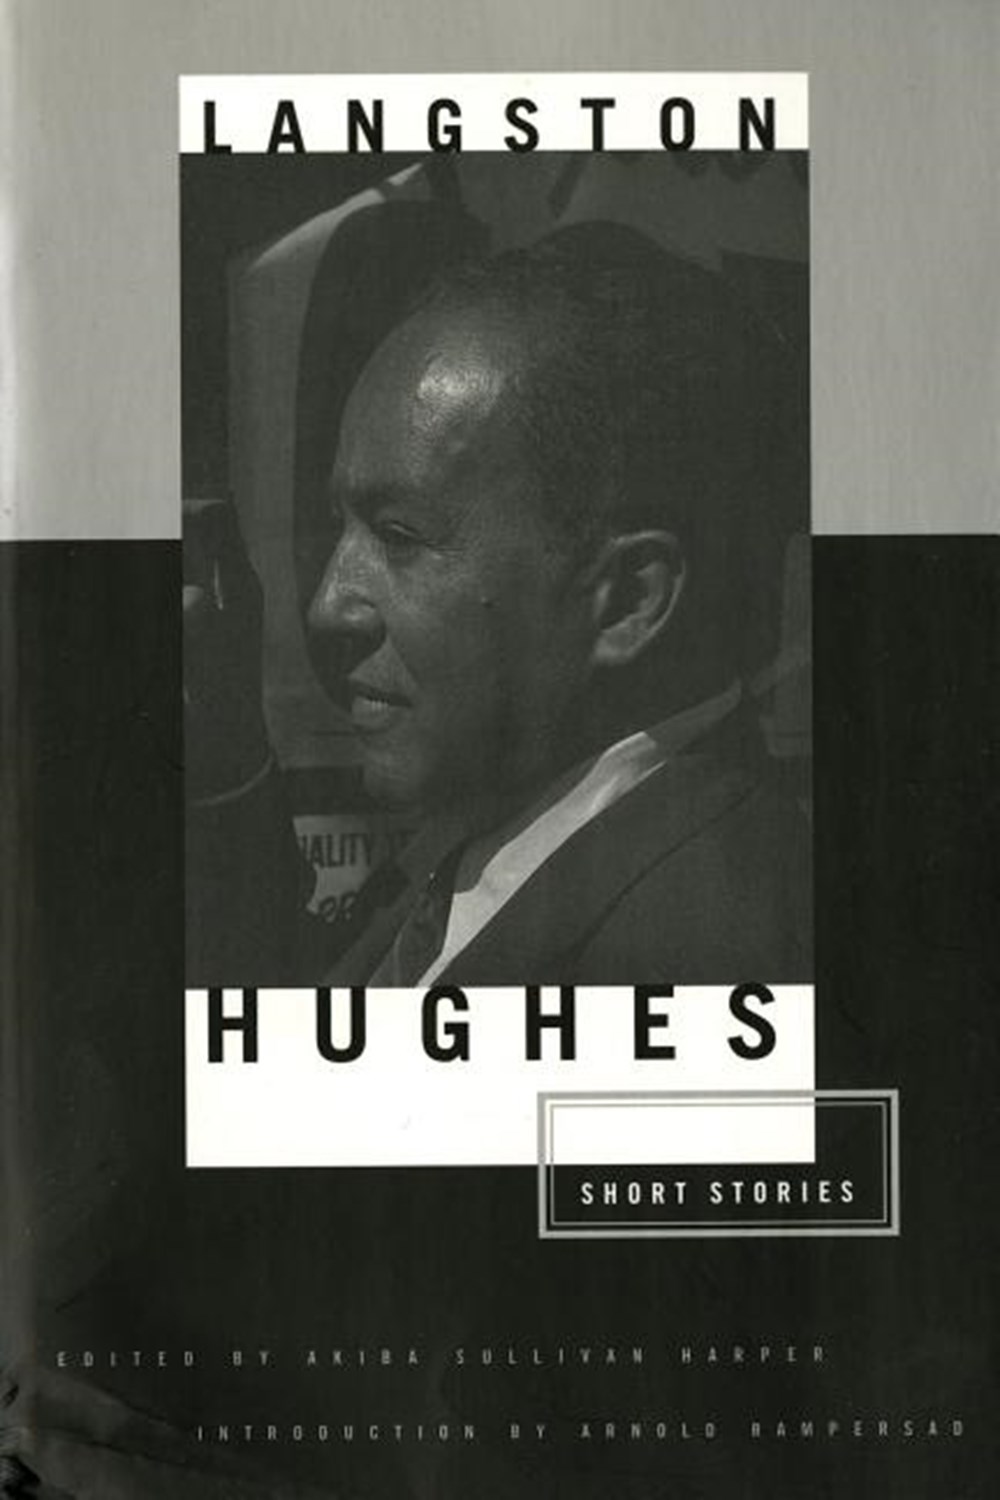 Short Stories of Langston Hughes